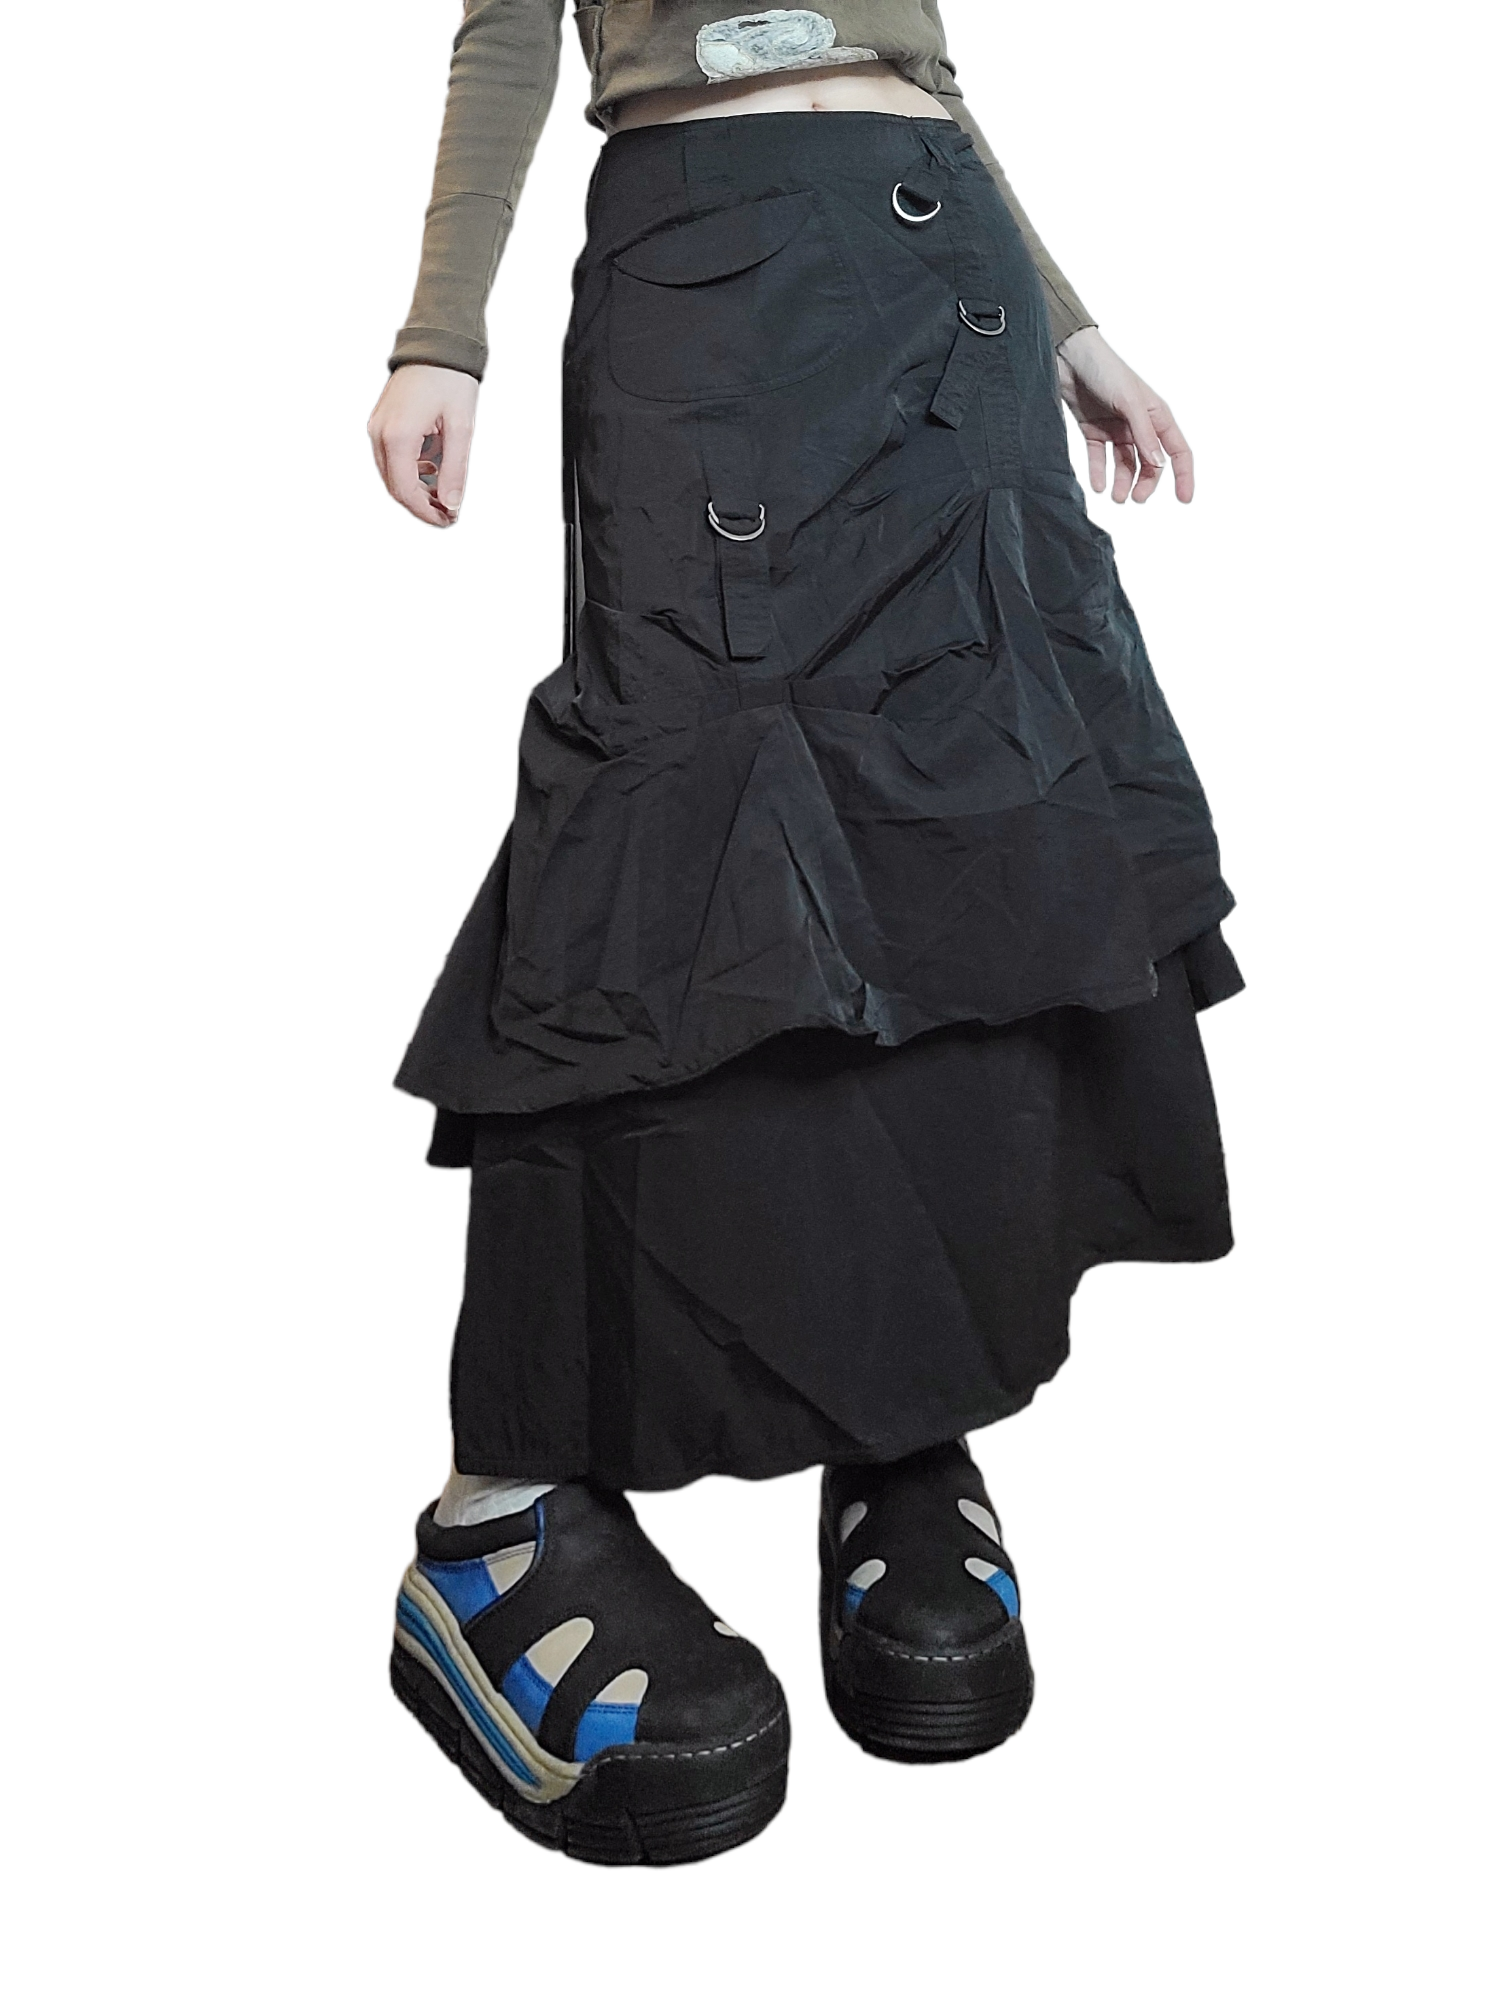 Archive fashion maxi skirt gorpcore techwear harajuku froncage utility subversive basics cybery2k parachute rave